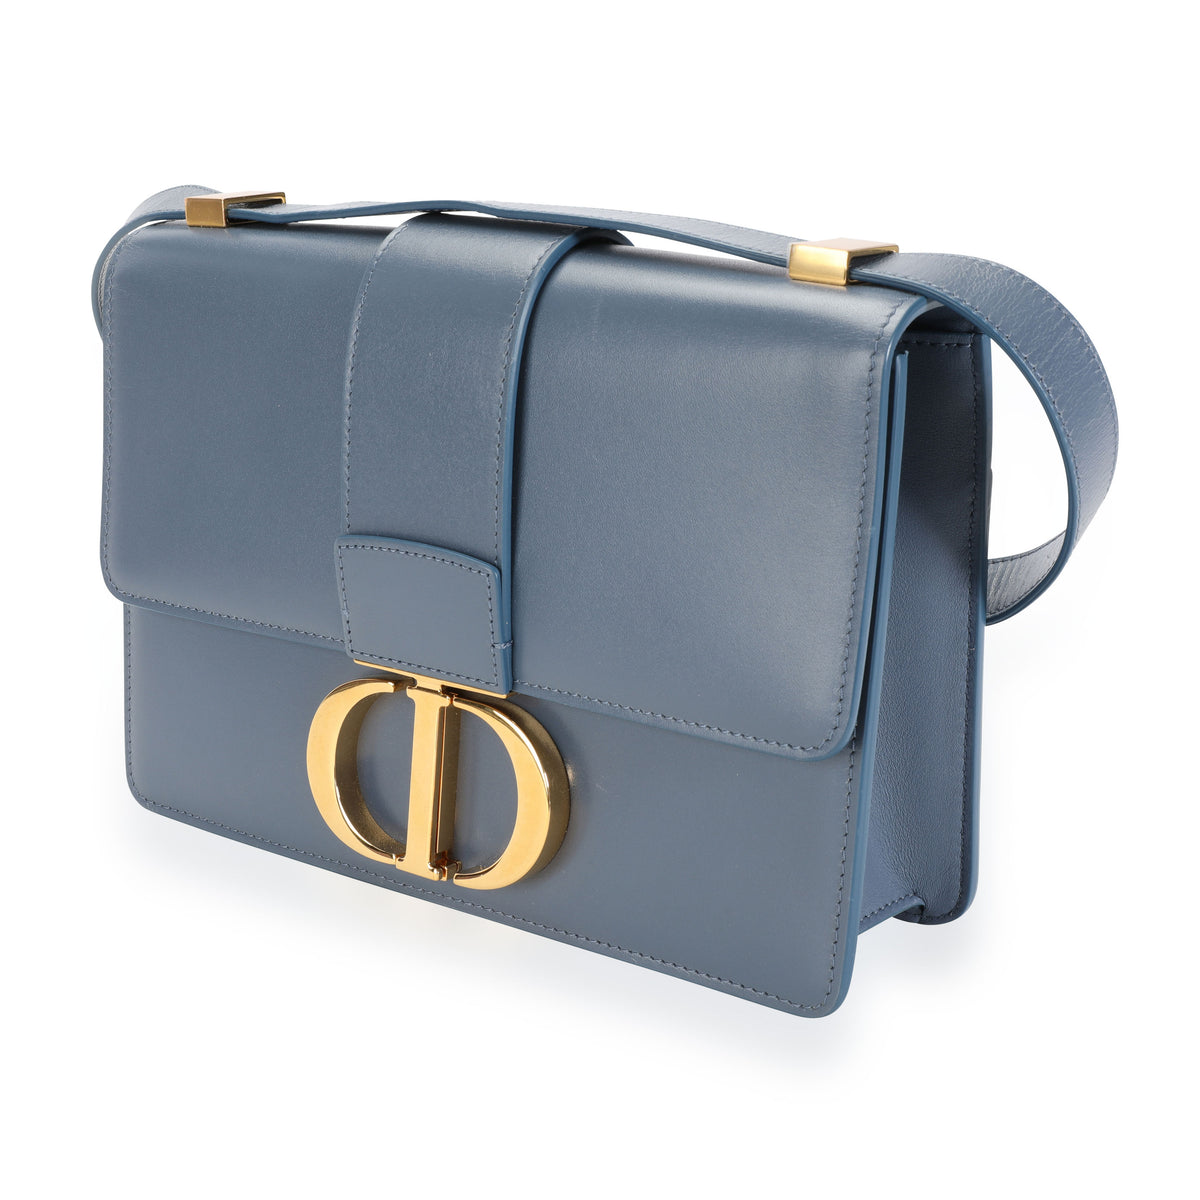 *AUTH Dior 30 Montaigne Bag - Indigo Blue Gradient Calfskin